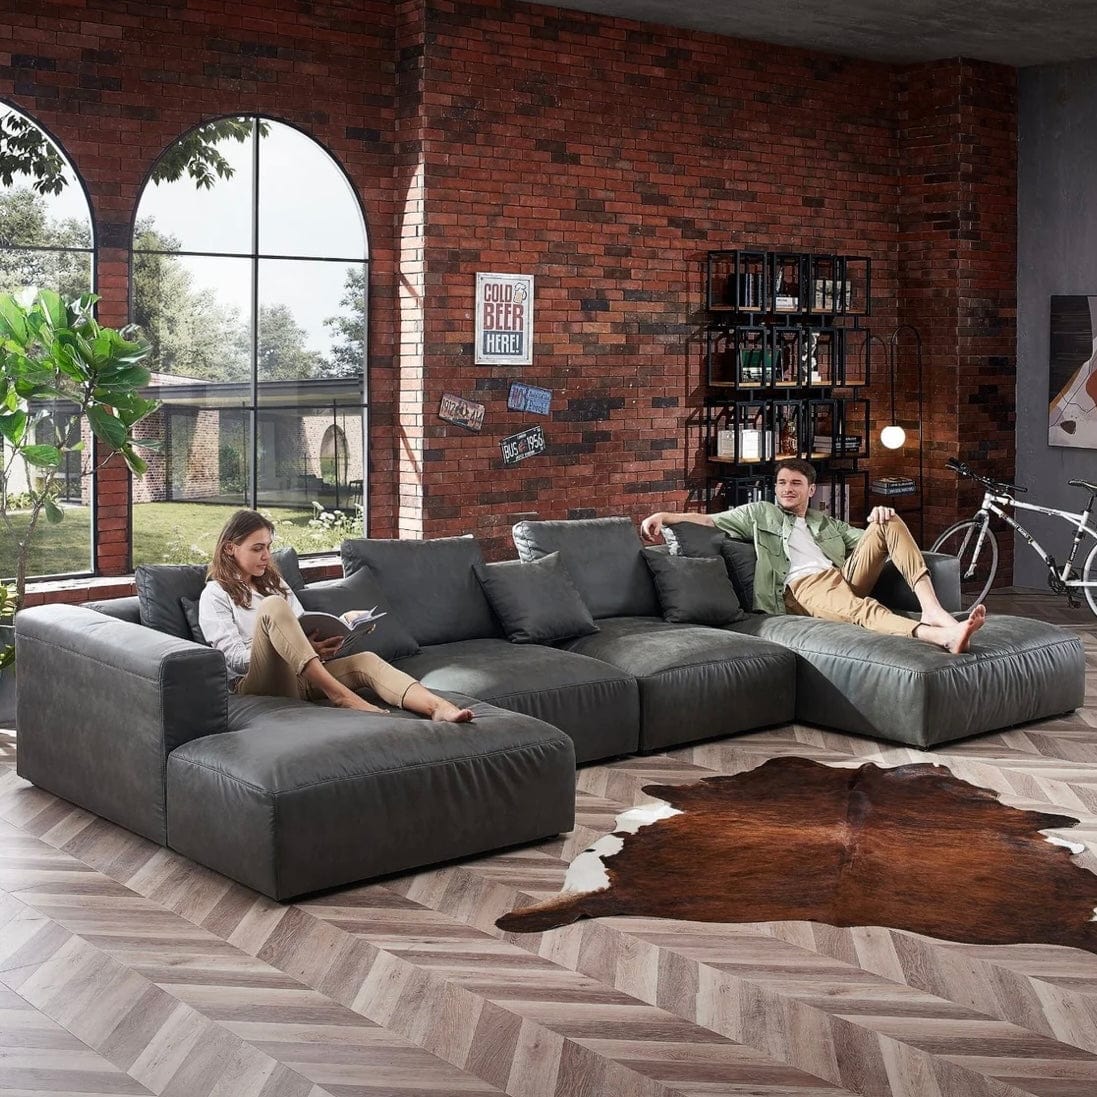 Nathan Modular Premium Leather Sofa for Media Rooms